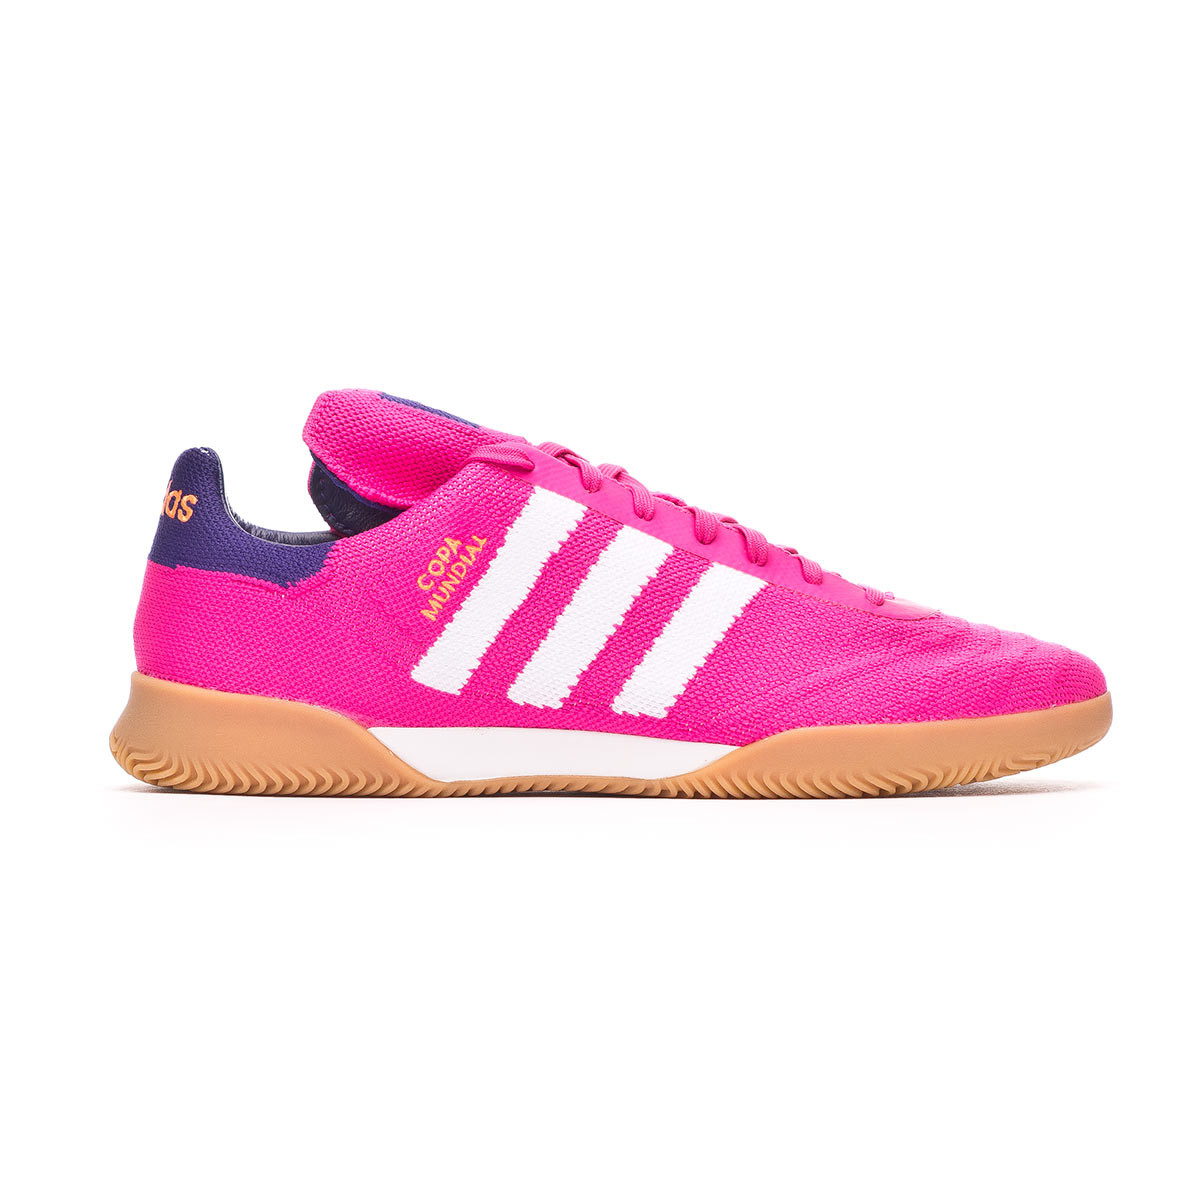 Futsal Shoes Adidas Copa Mundial Pk Tr Shock Pink White Collegiate Purple Futbol Emotion